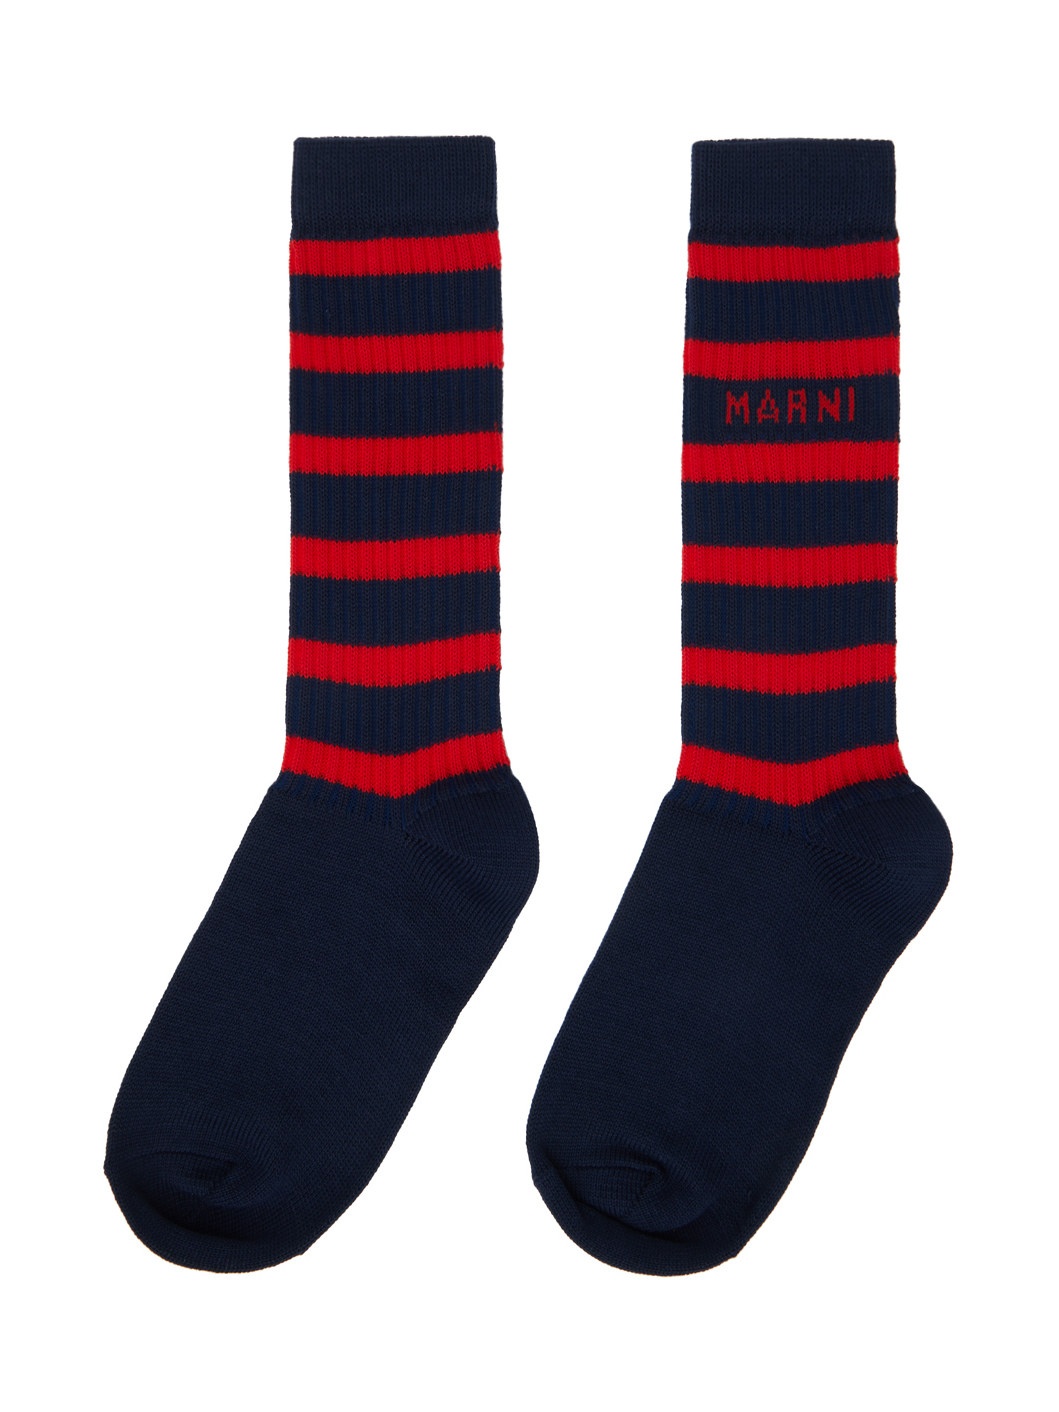 Navy Striped Socks - 2